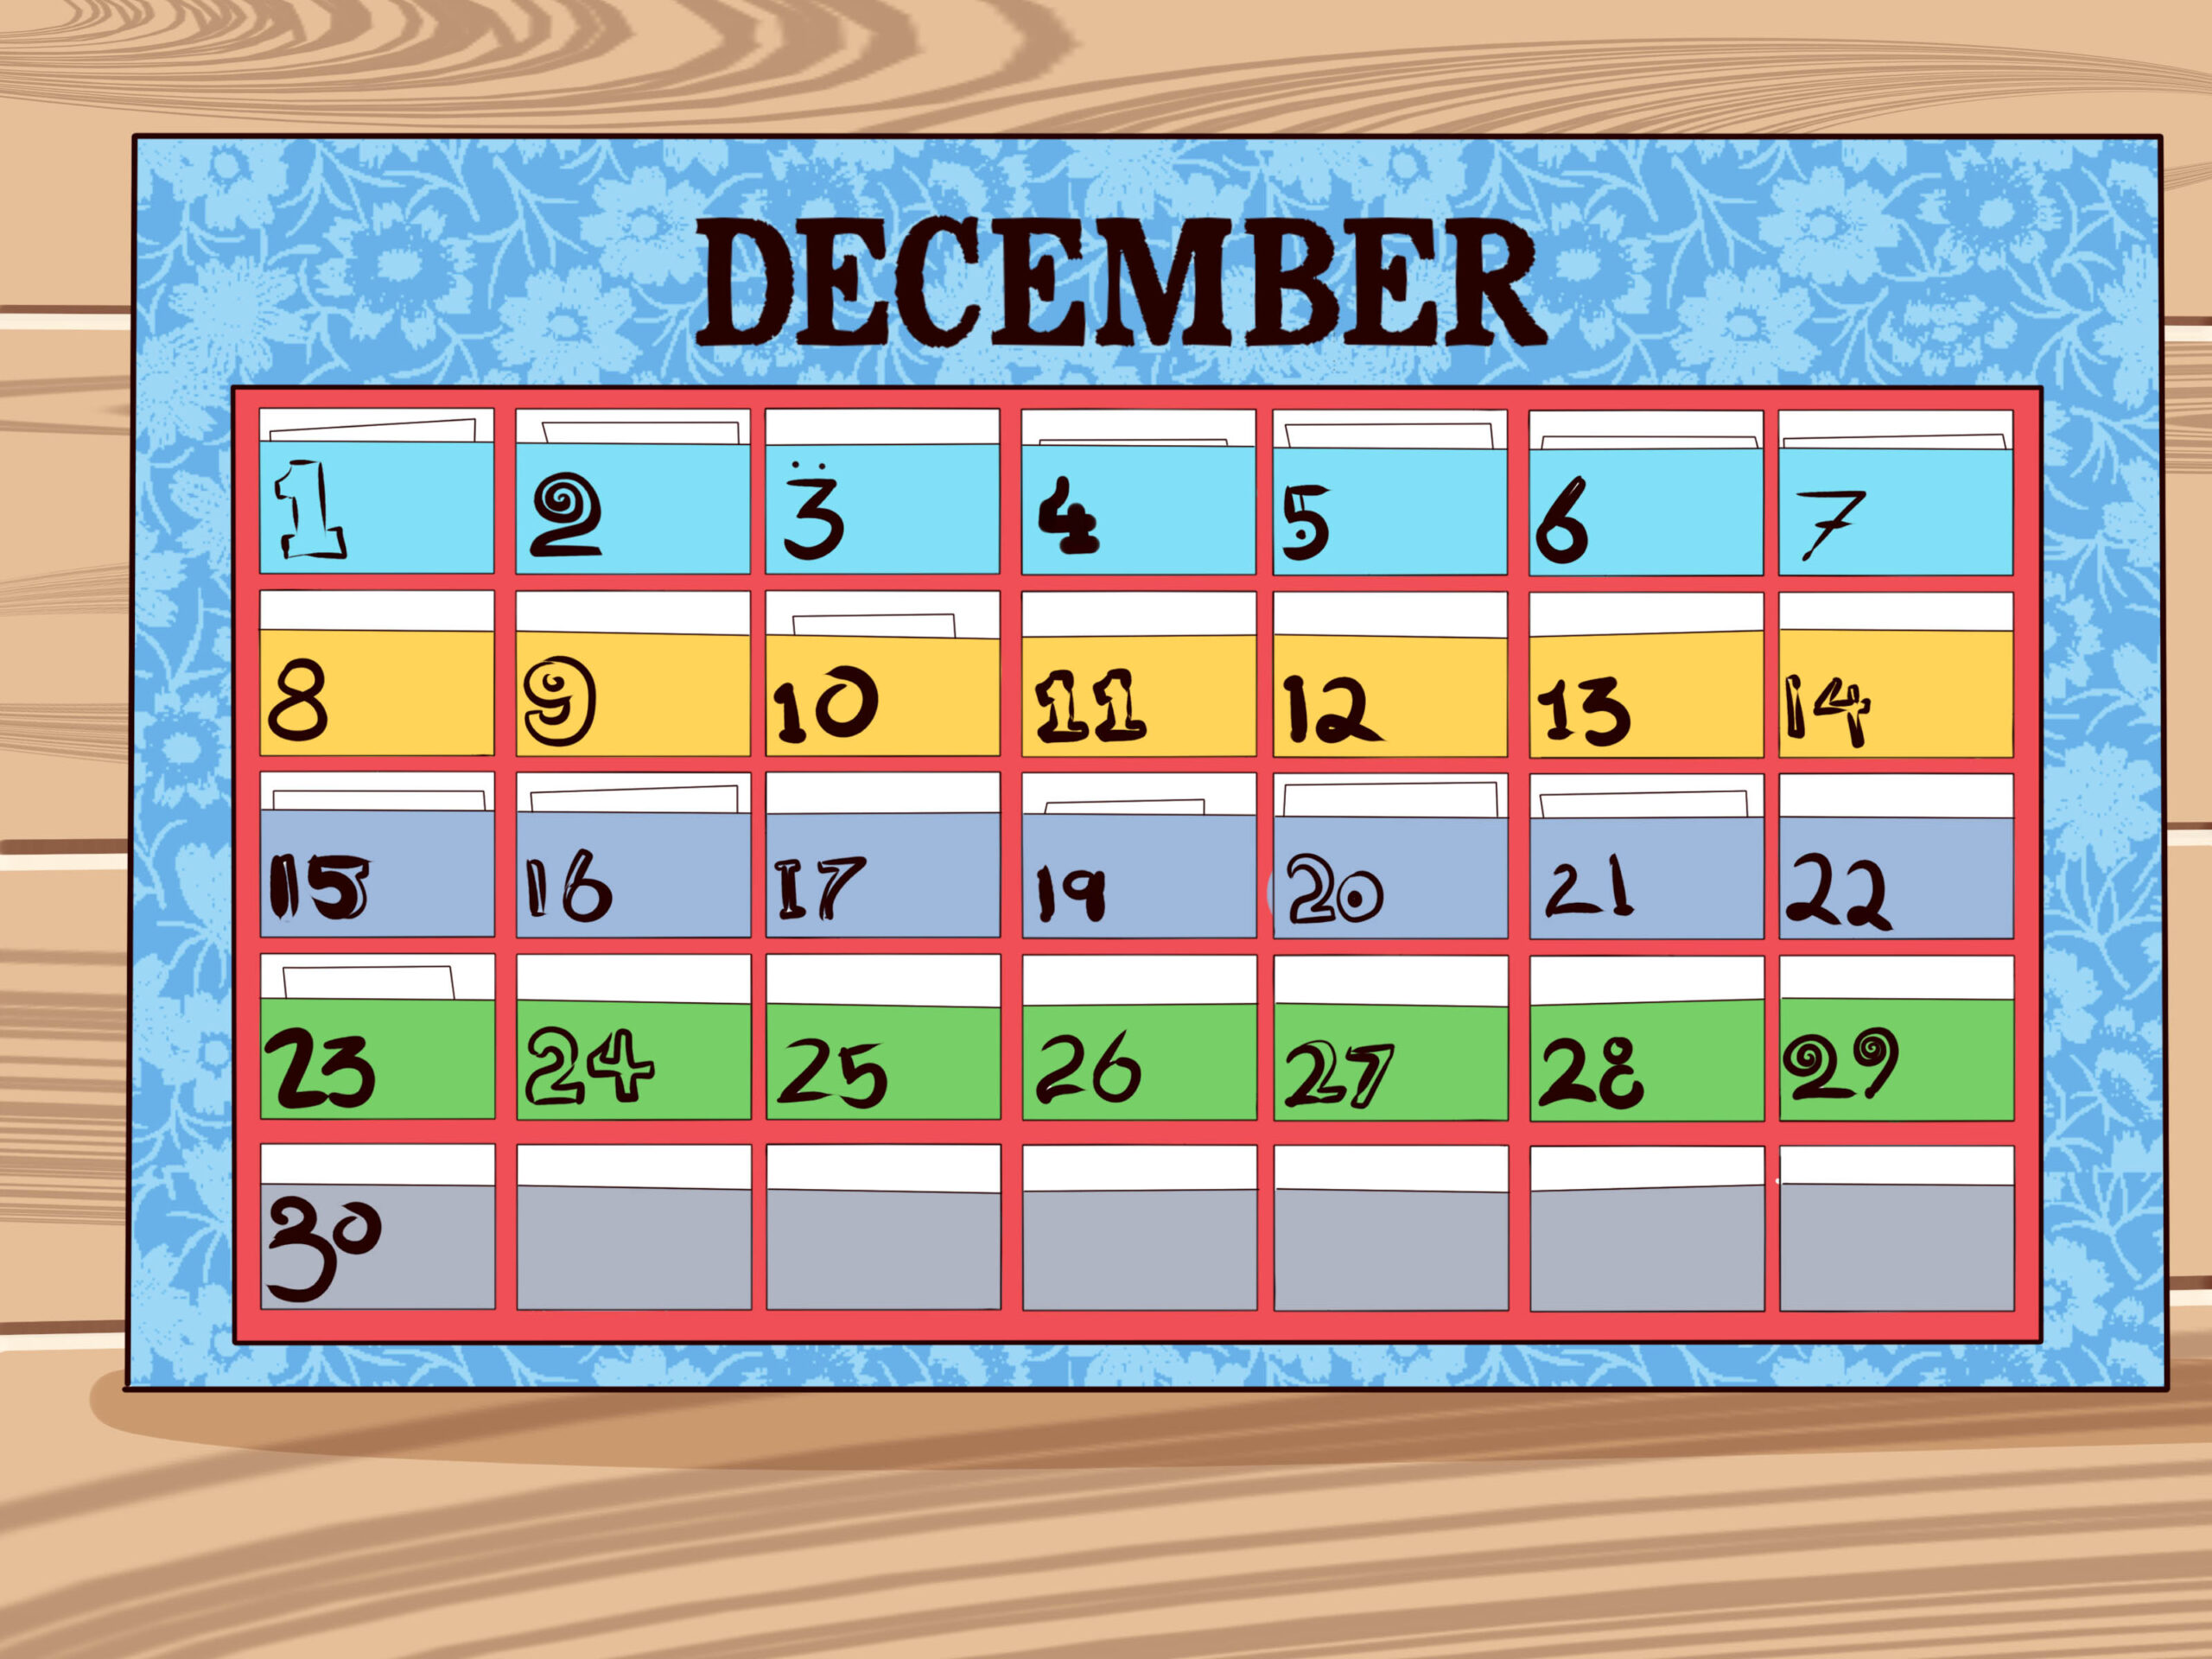 5 Ways To Make A Calendar - Wikihow